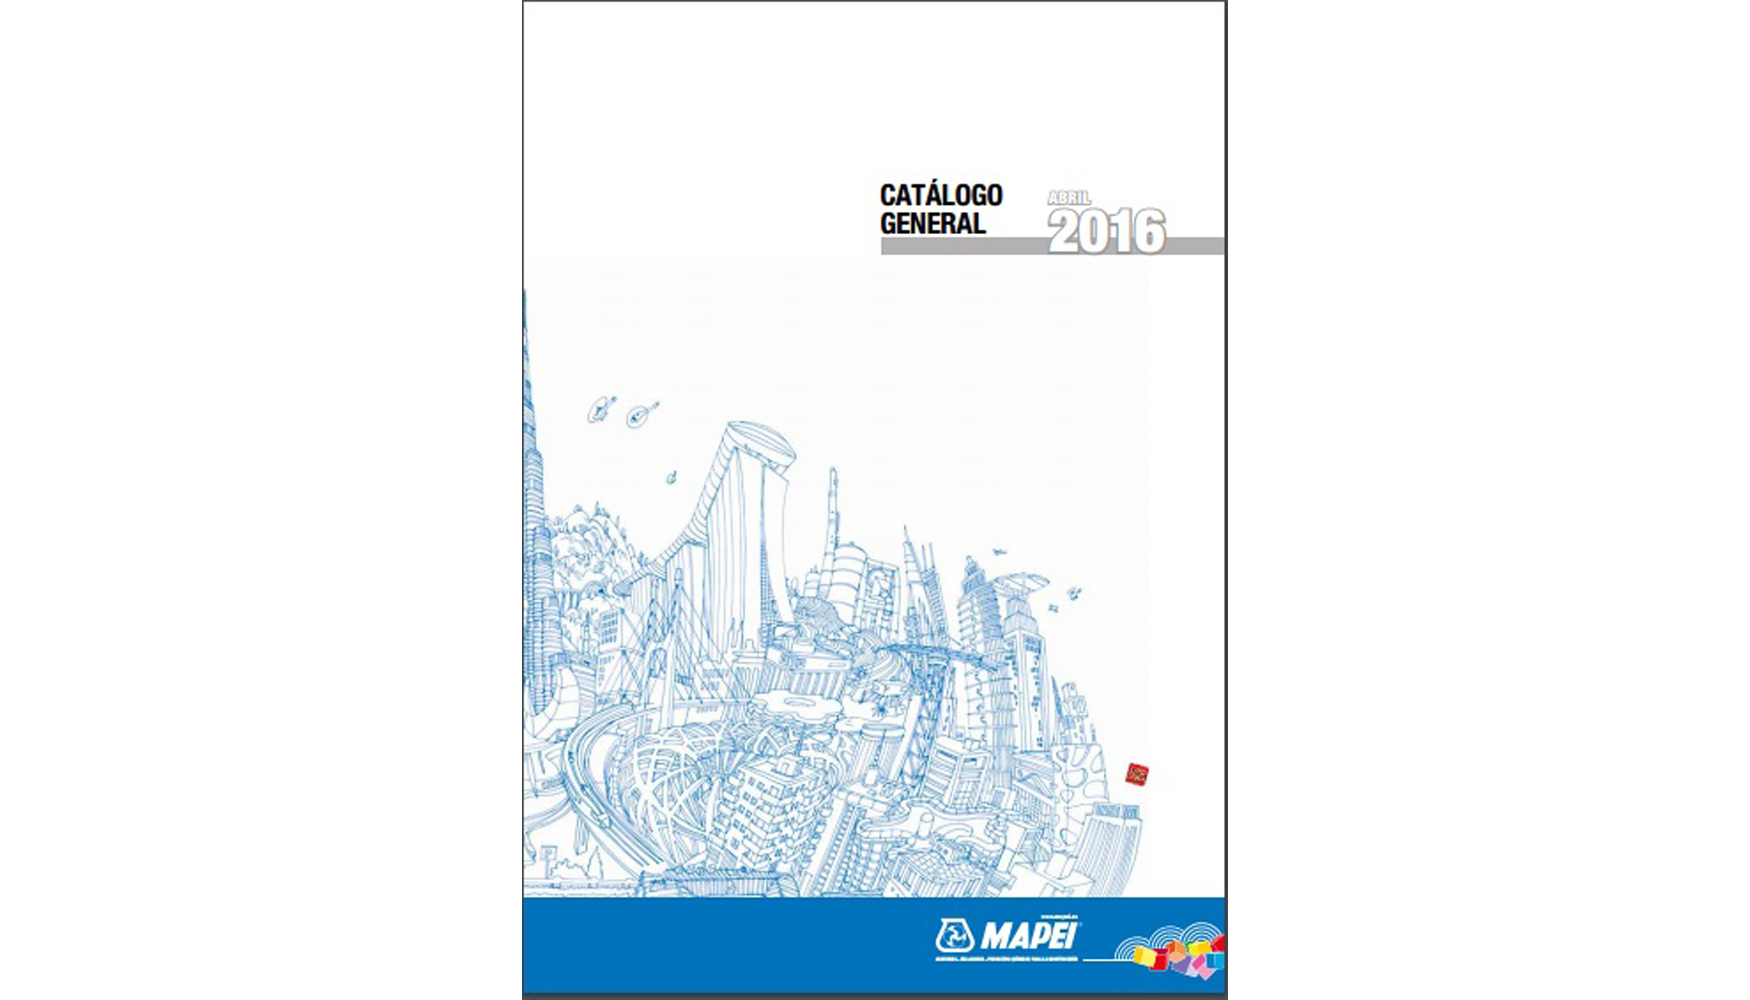 magen de la portada del Catlogo General 2016 de Mapei